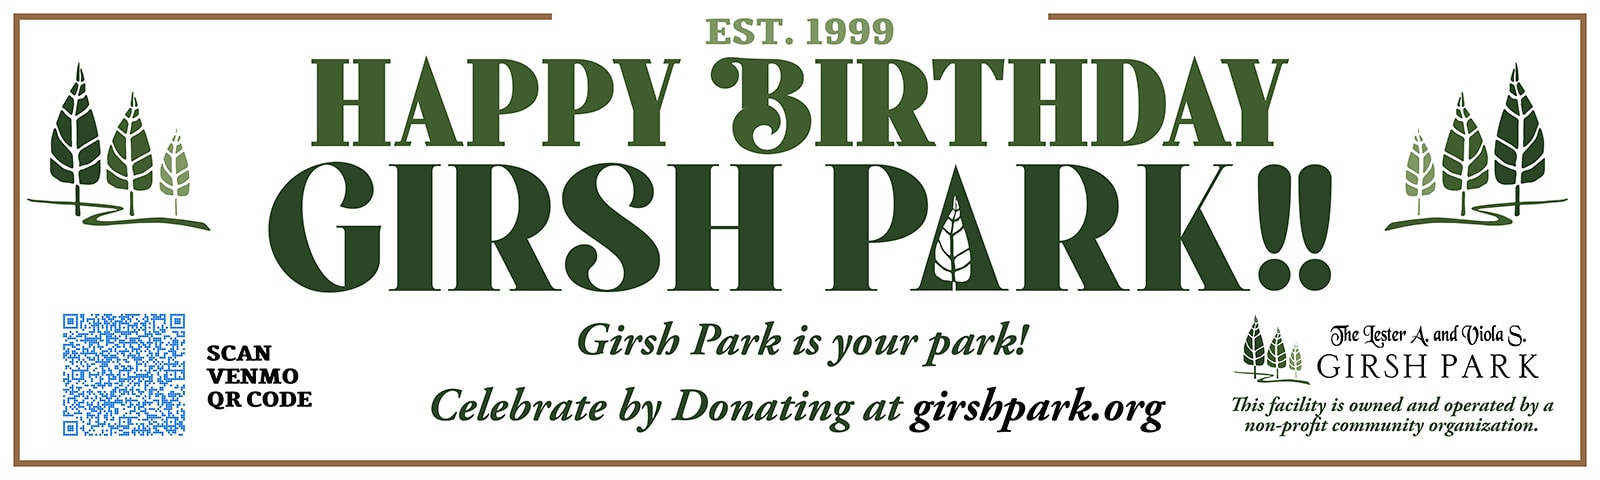 Girsh Park 25th Anniversary Banner